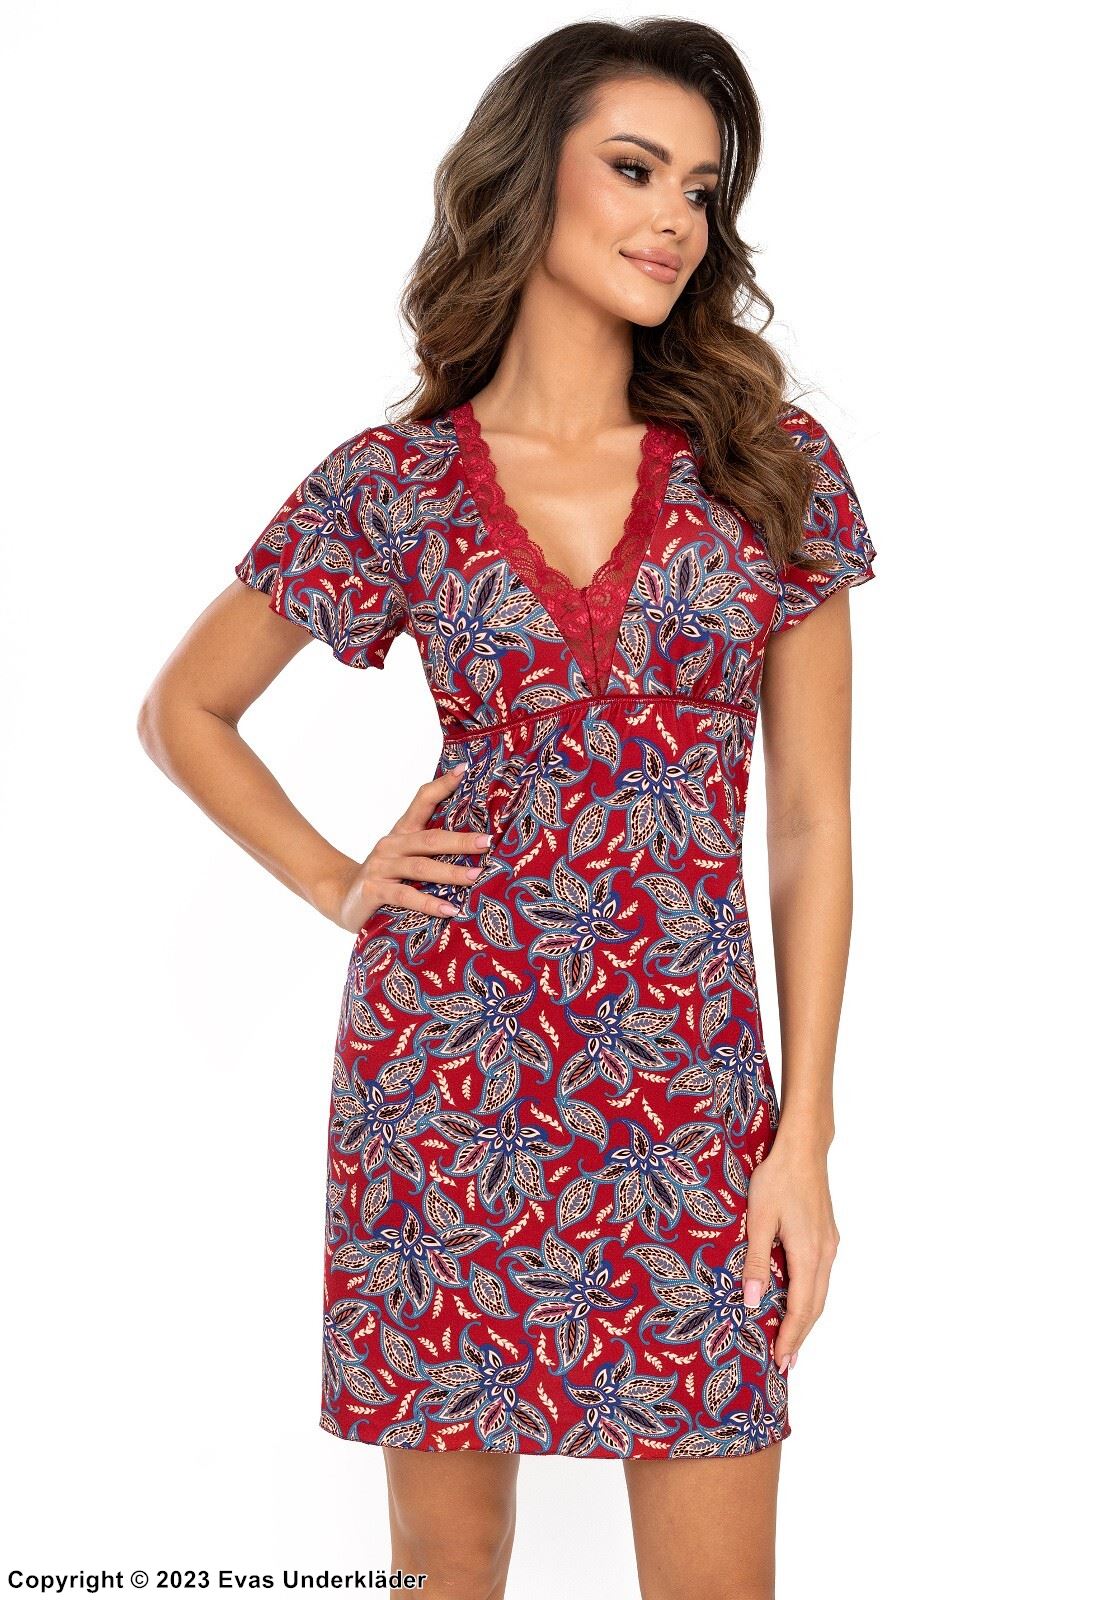 Pajamas dress, high quality viscose, lace edge, short sleeves, flowers